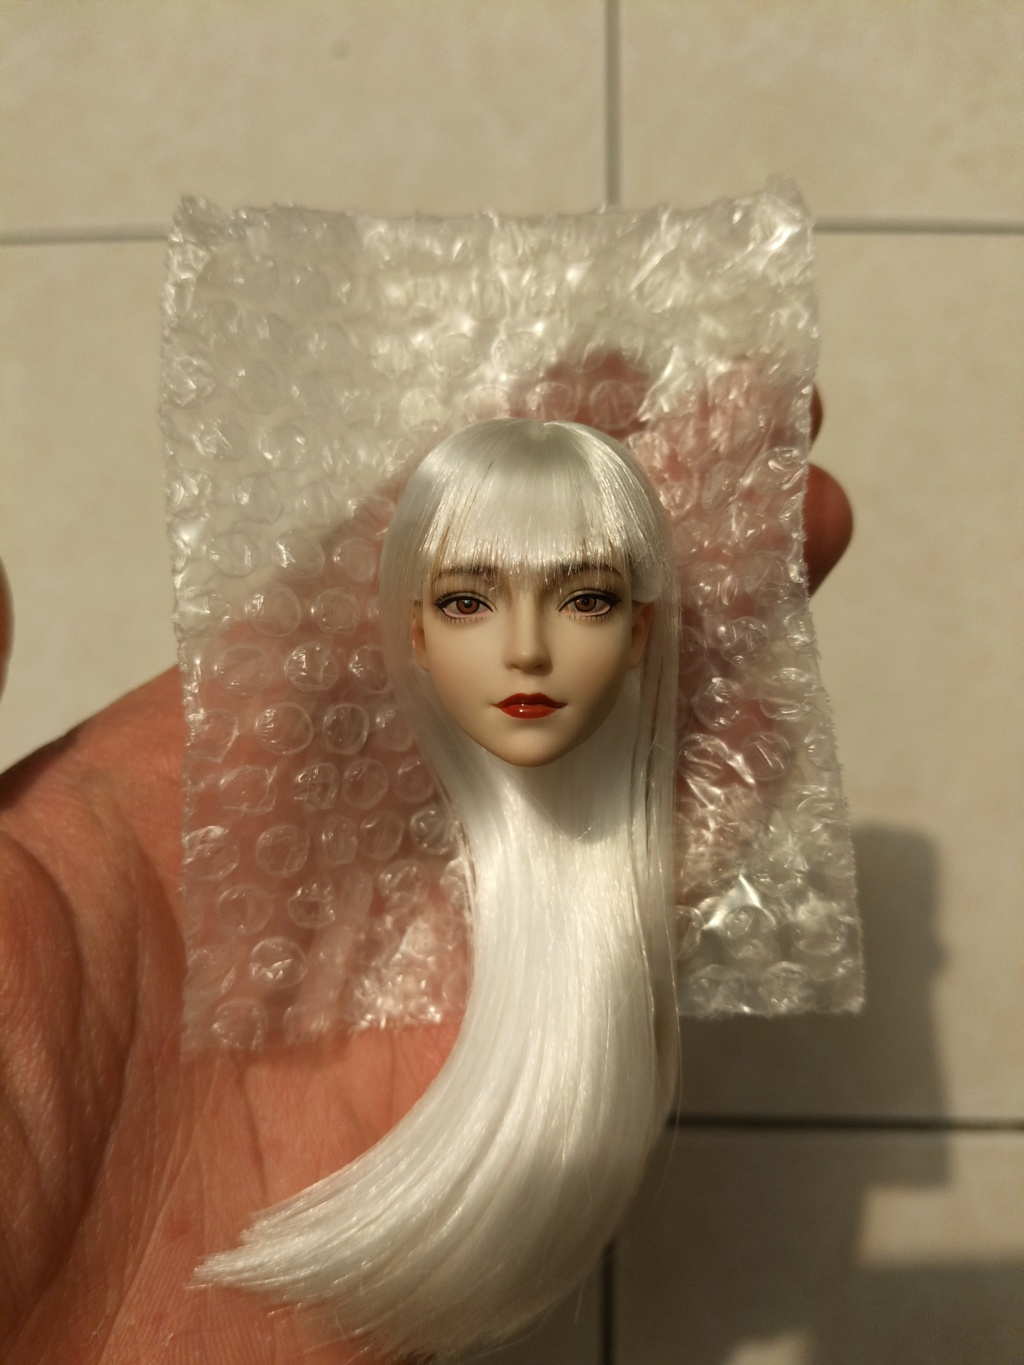 accessory - NEW PRODUCT: LZ TOYS: 1/6 hair transplant female head carving SET013 Mayfair A/B/C/D four hair colors O1cn0137